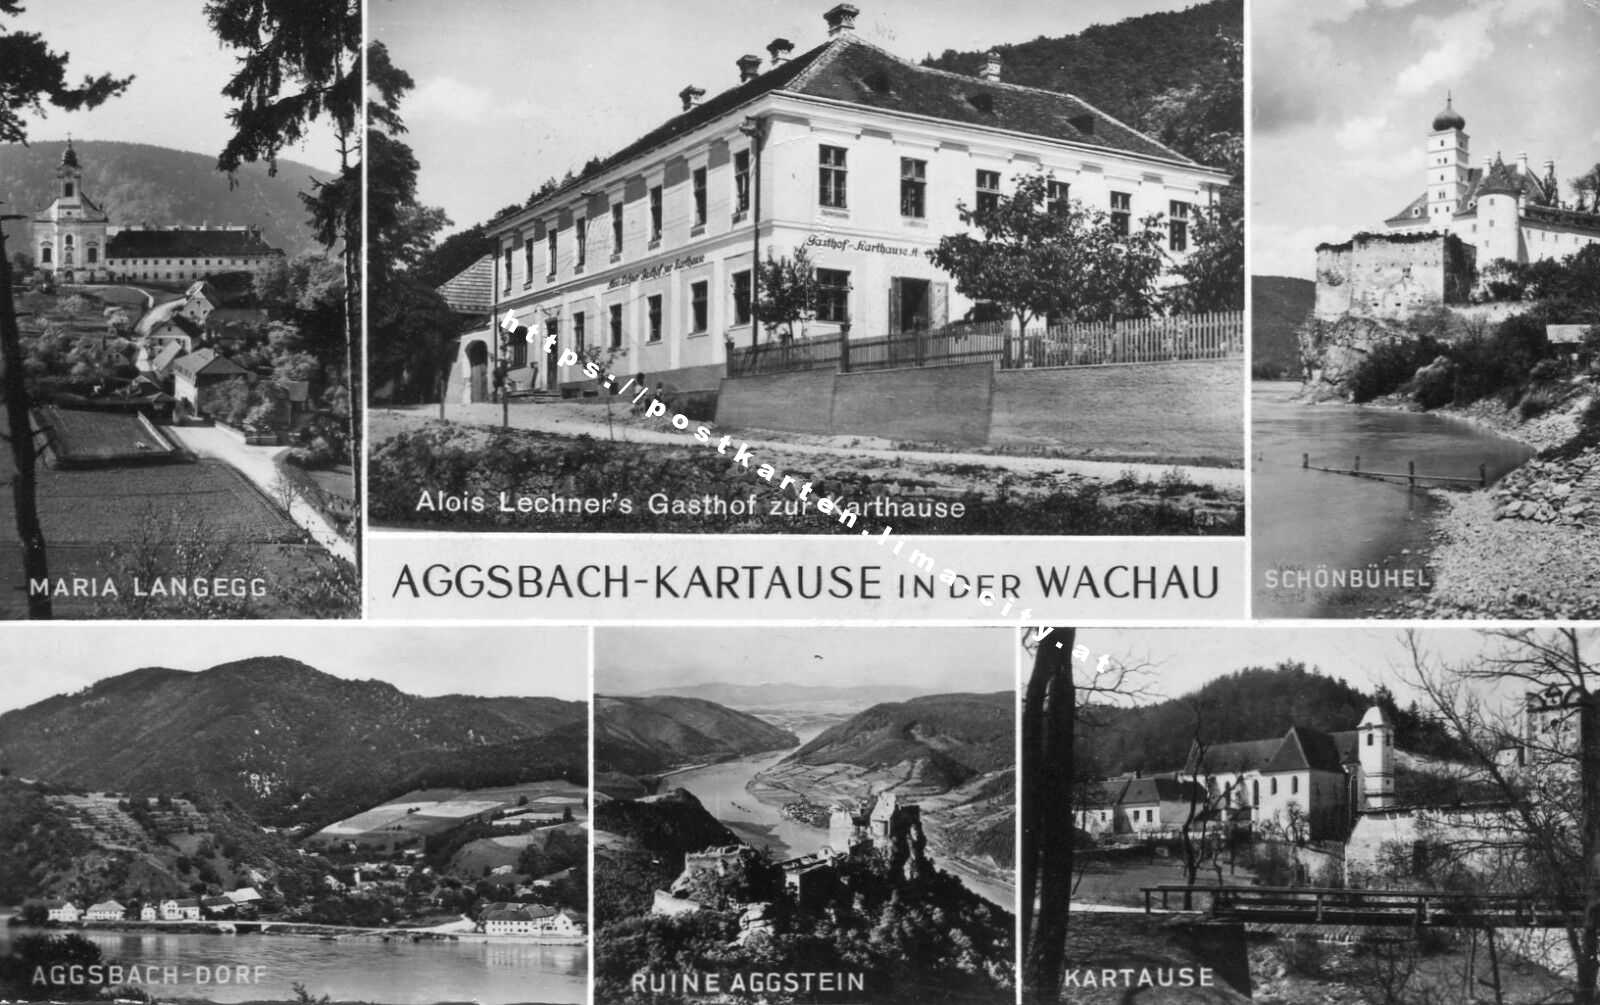 Aggsbach Kartause in der Wachau 1969